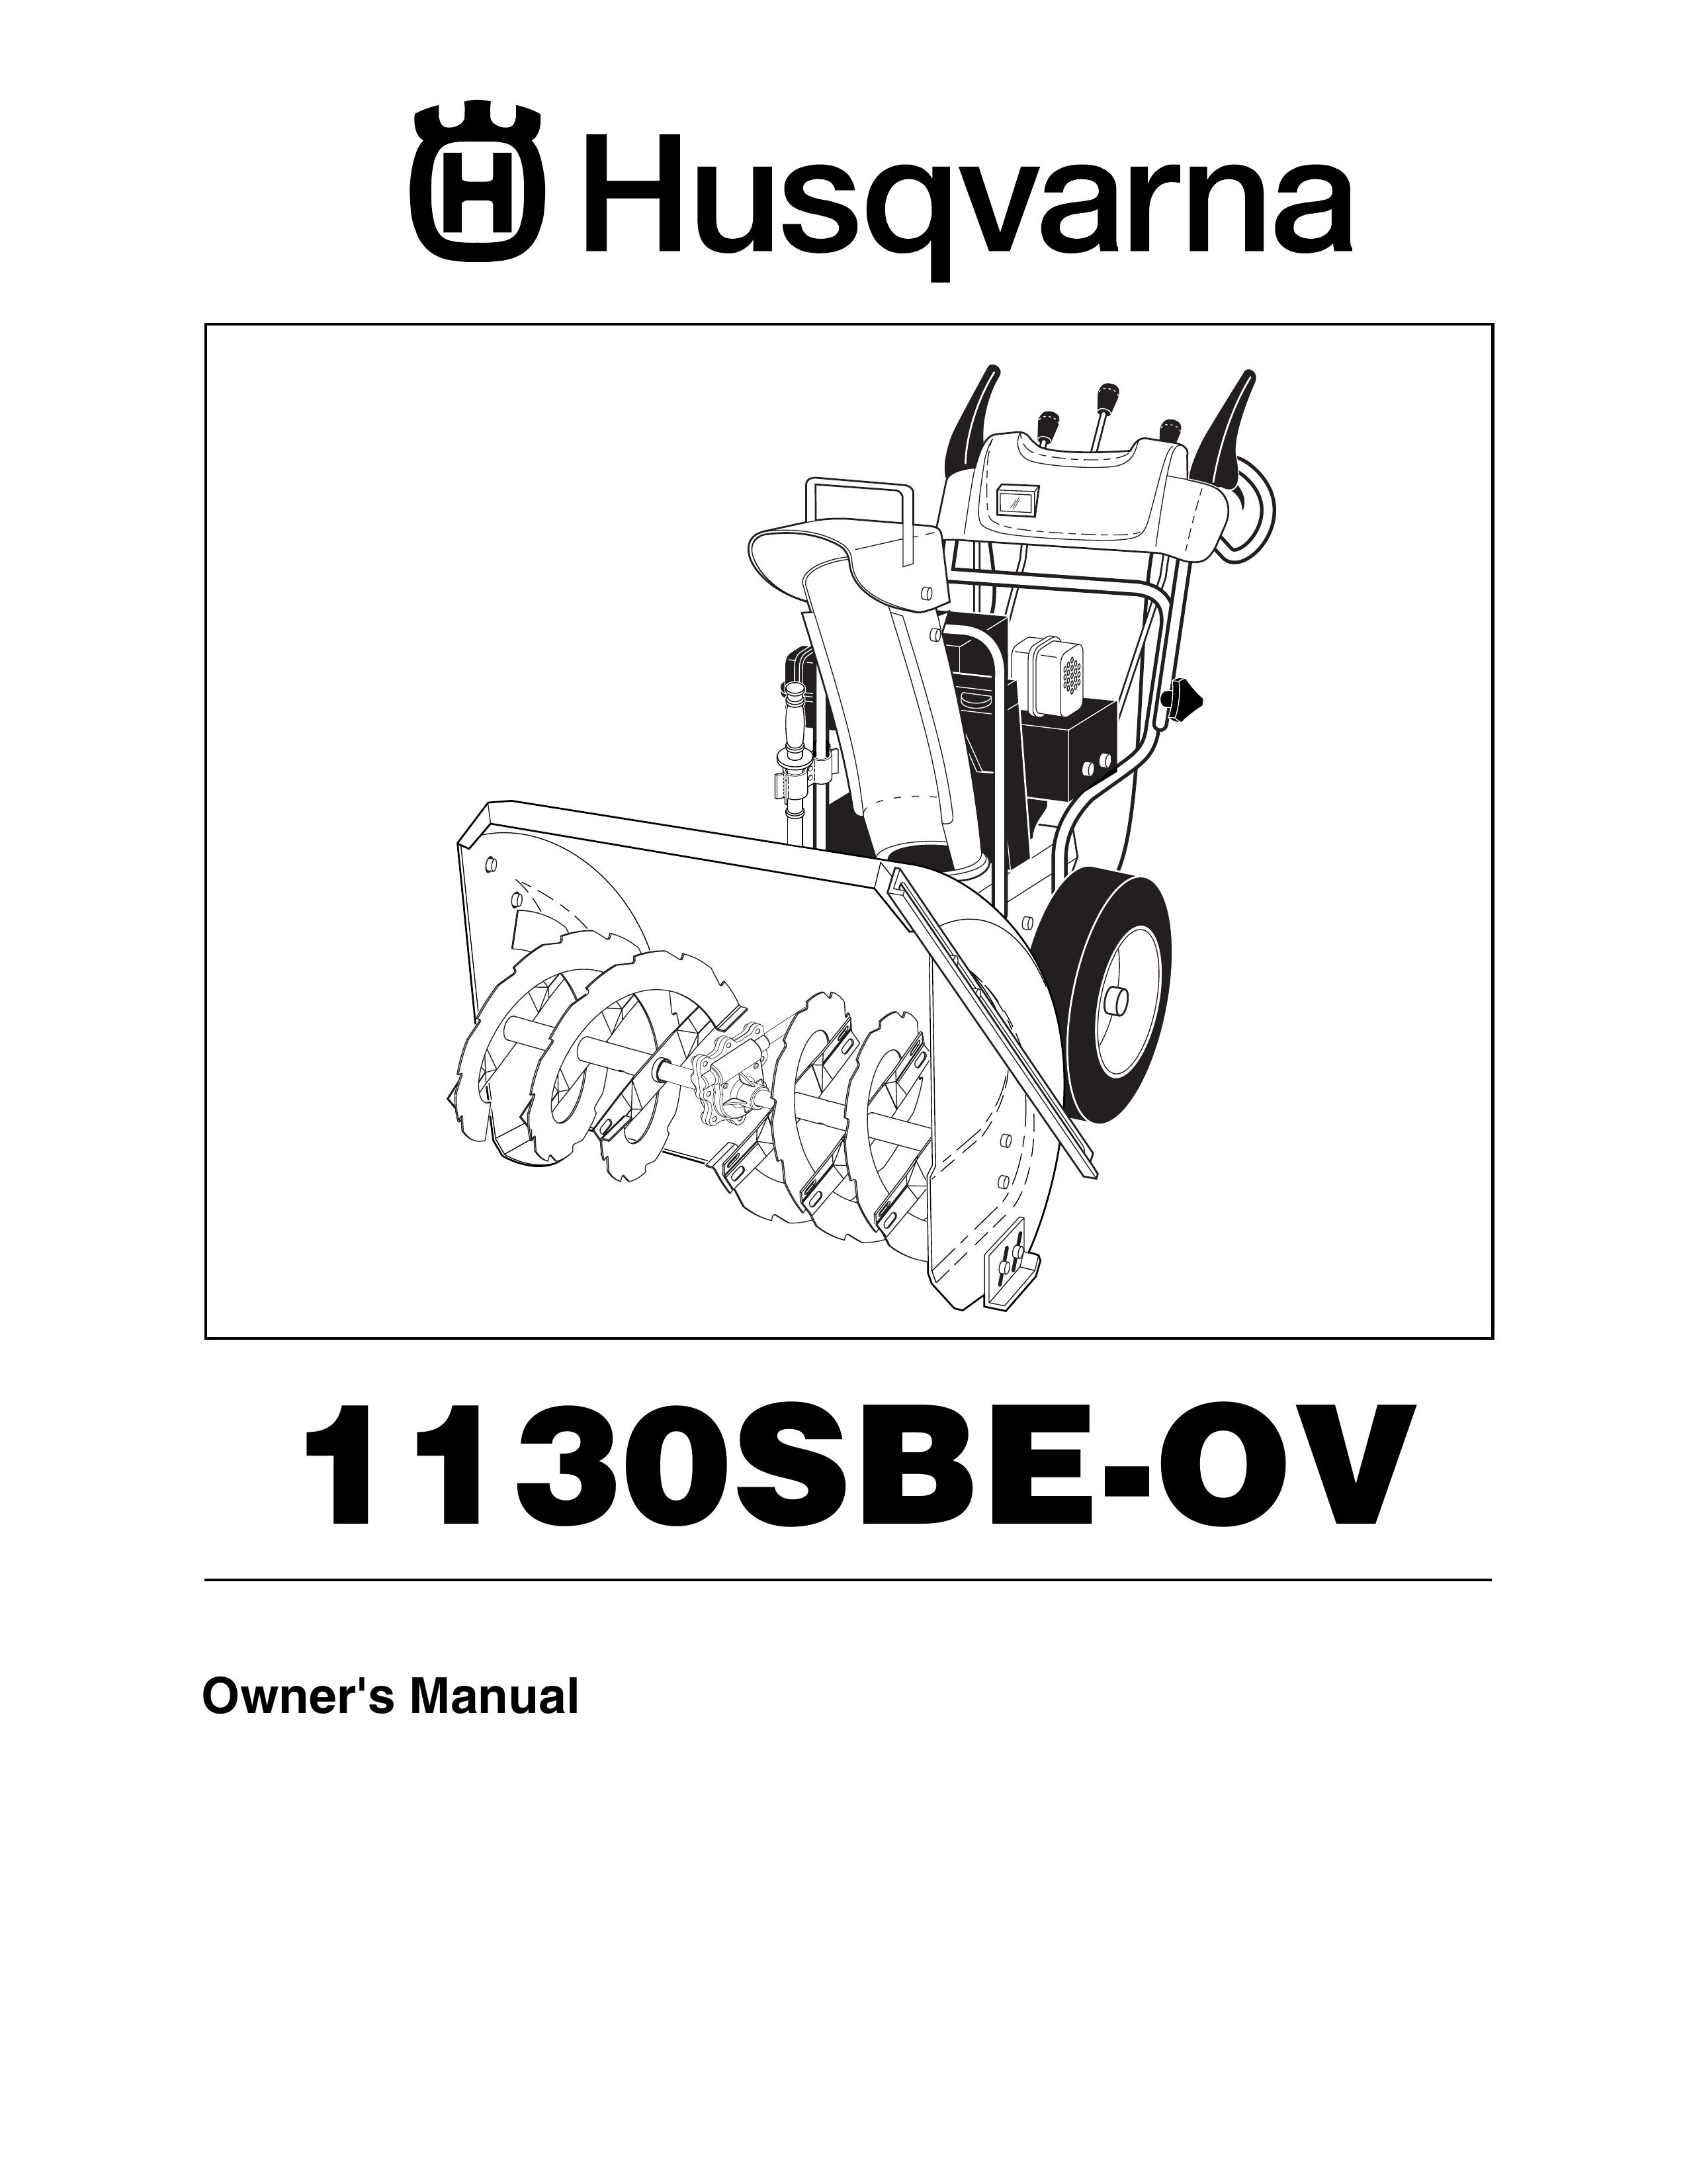 Husqvarna 1130SBE-OV Snow Blower User Manual